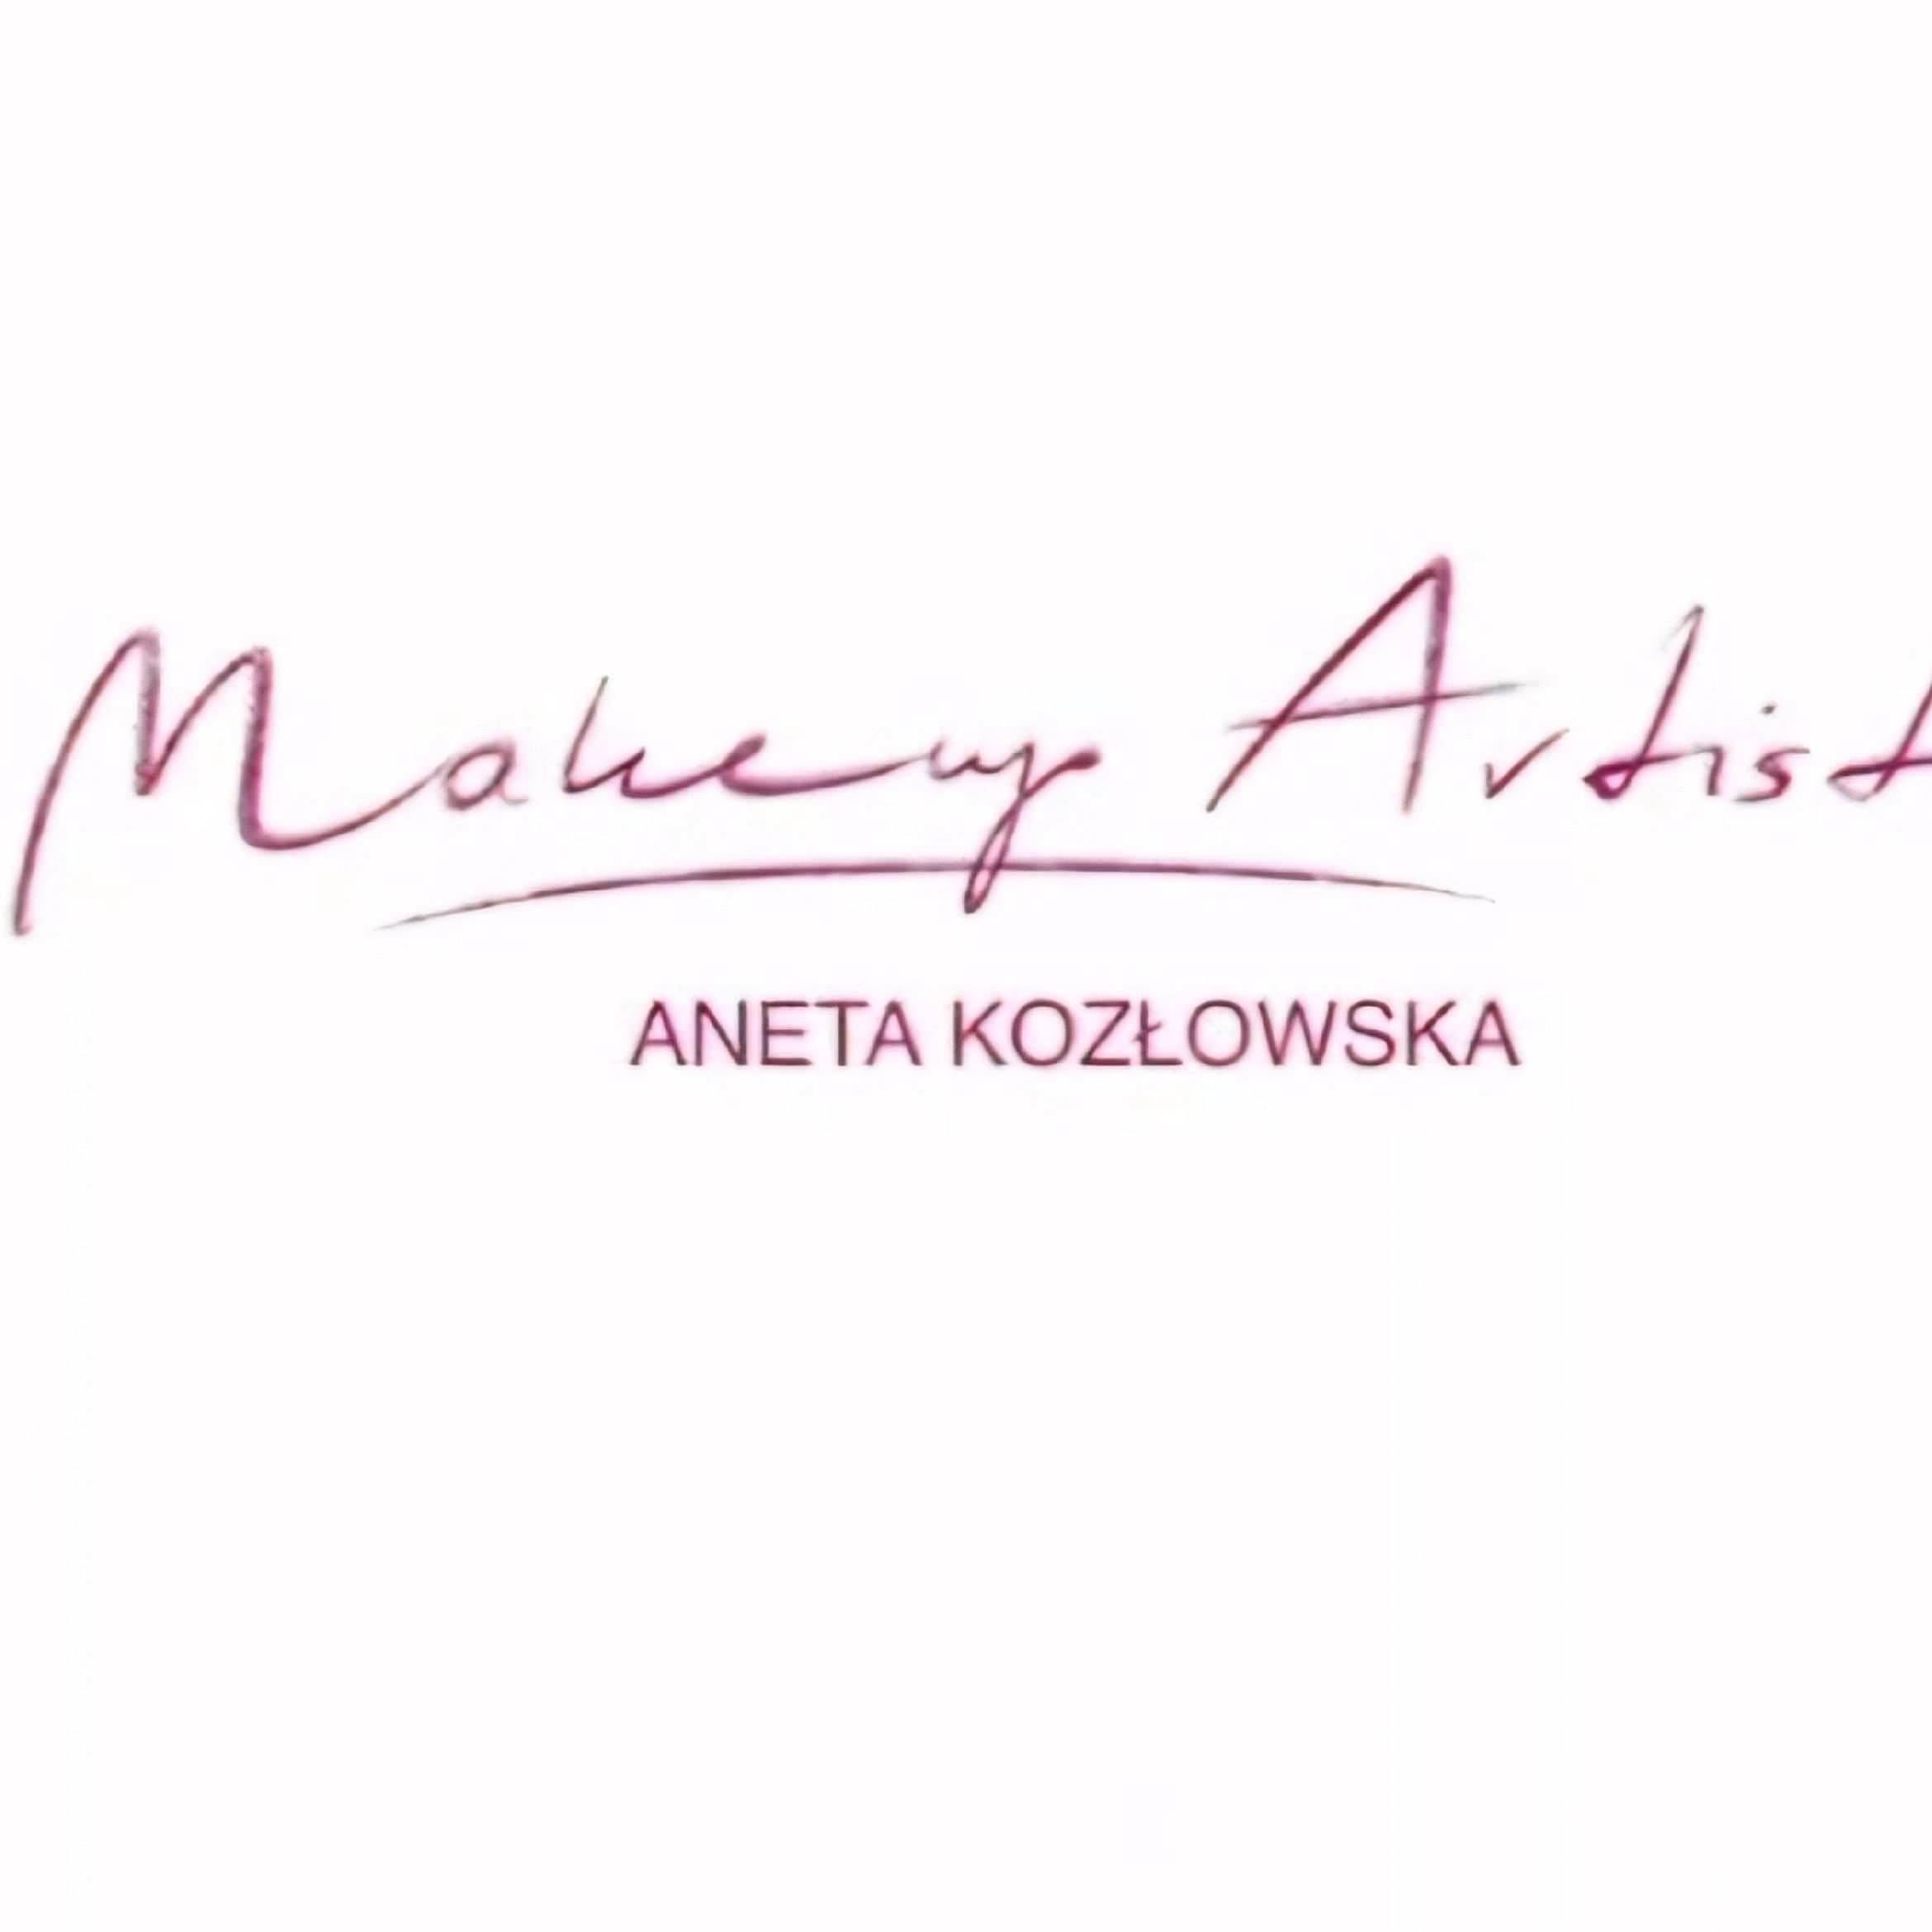 Aneta Kozłowska makeup, 80-261, Gdańsk